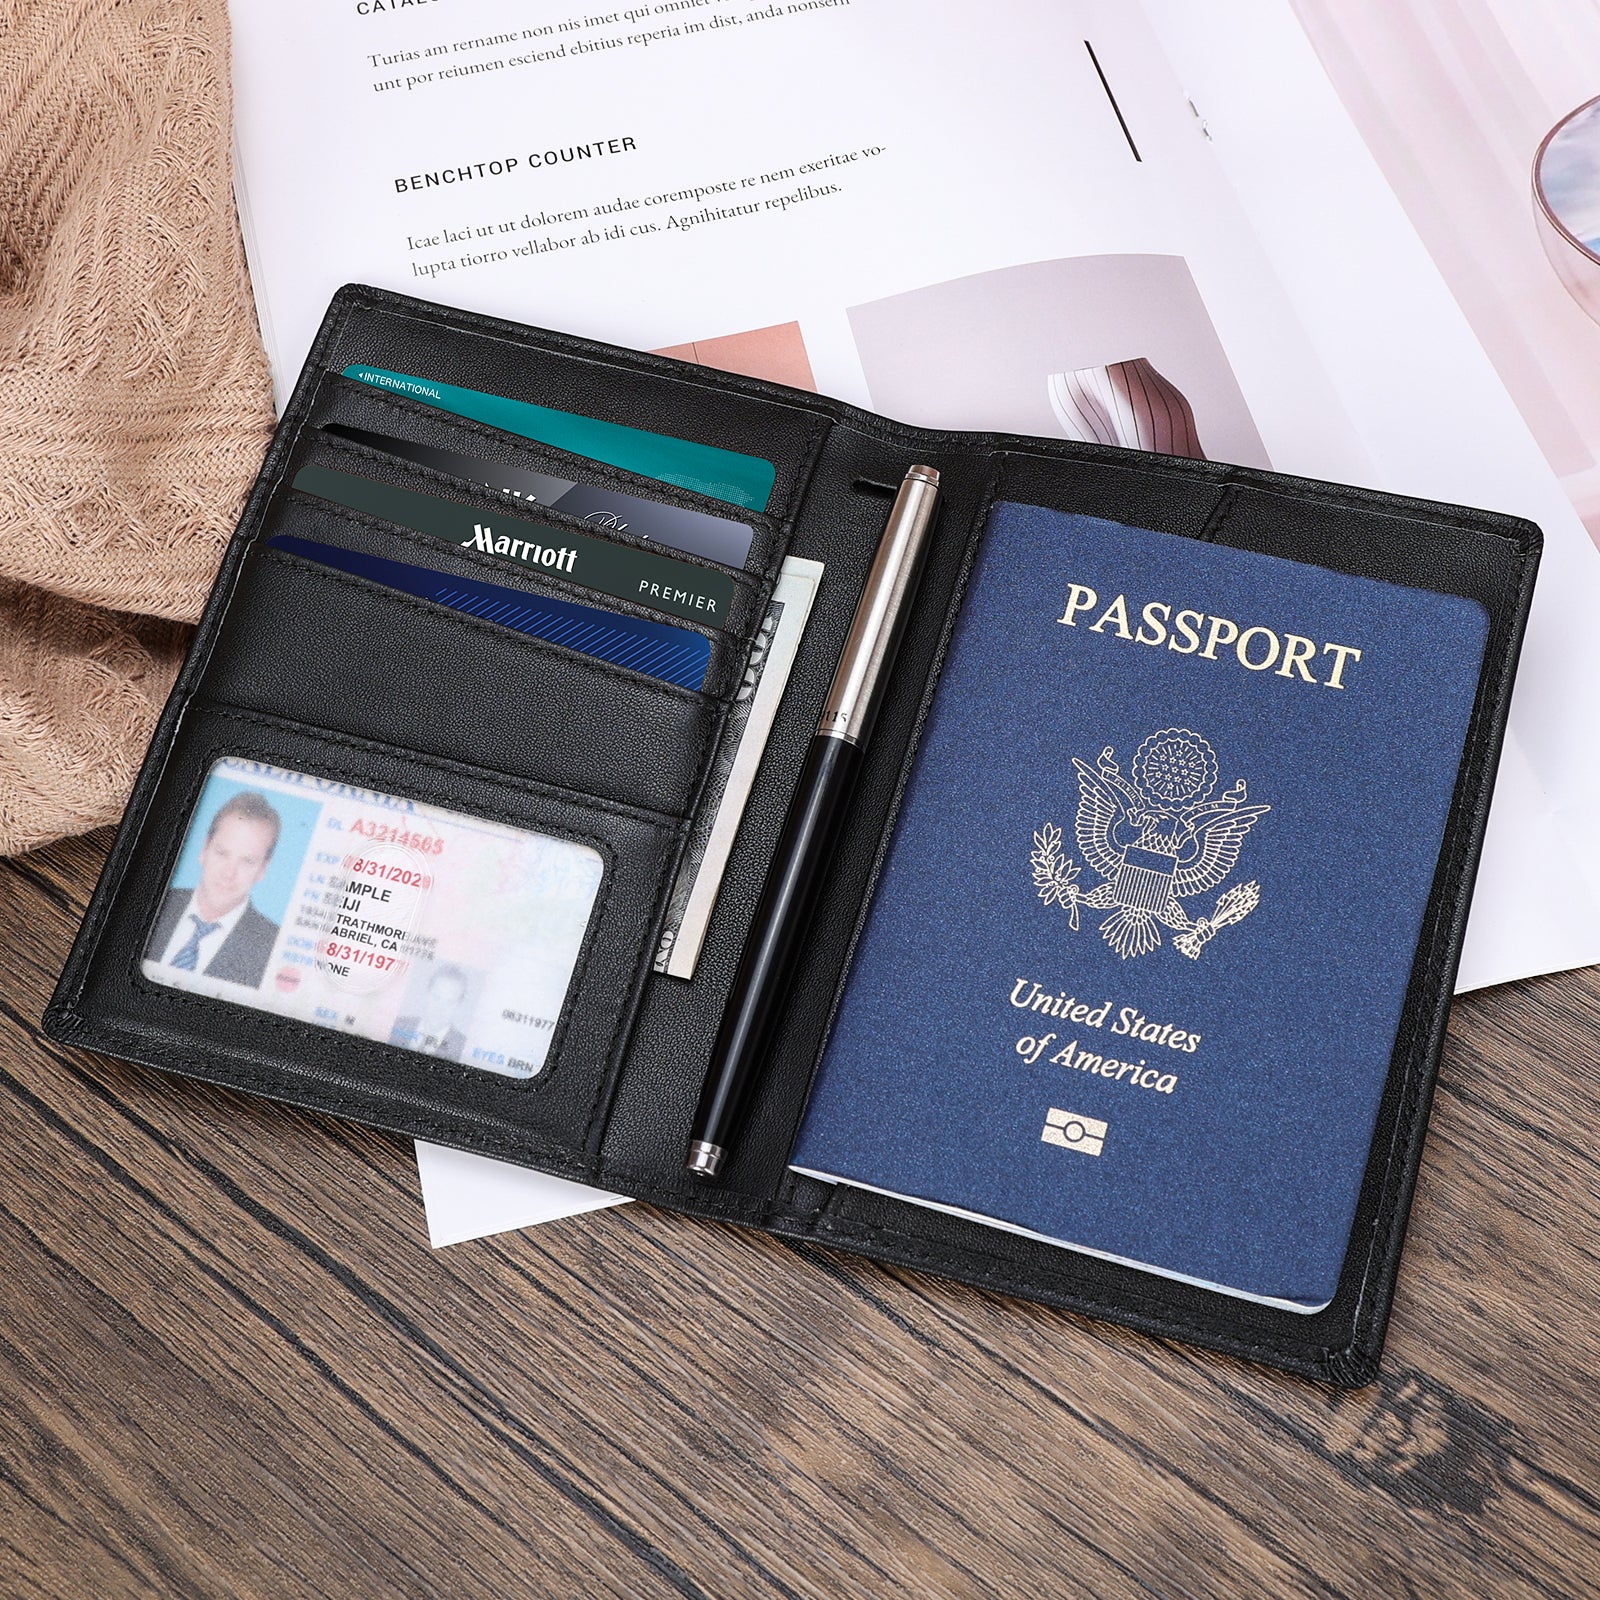 Polare Napa Leather Family Travel Passport Wallet and Documents Organizer  RFID Blocking Case Holder Fits 6 Passports (Black)